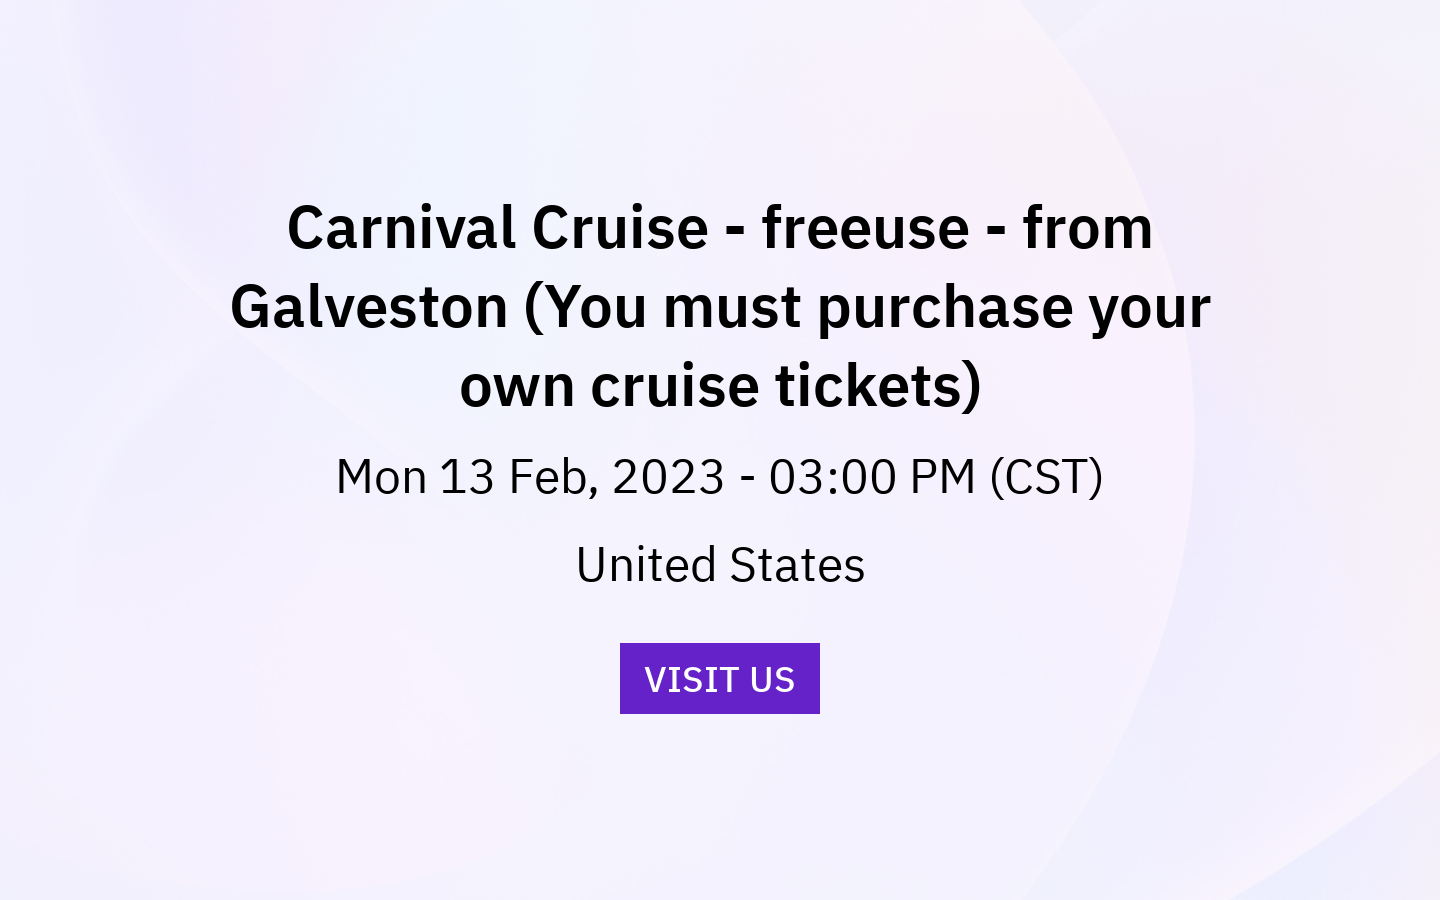 cruise tickets from galveston